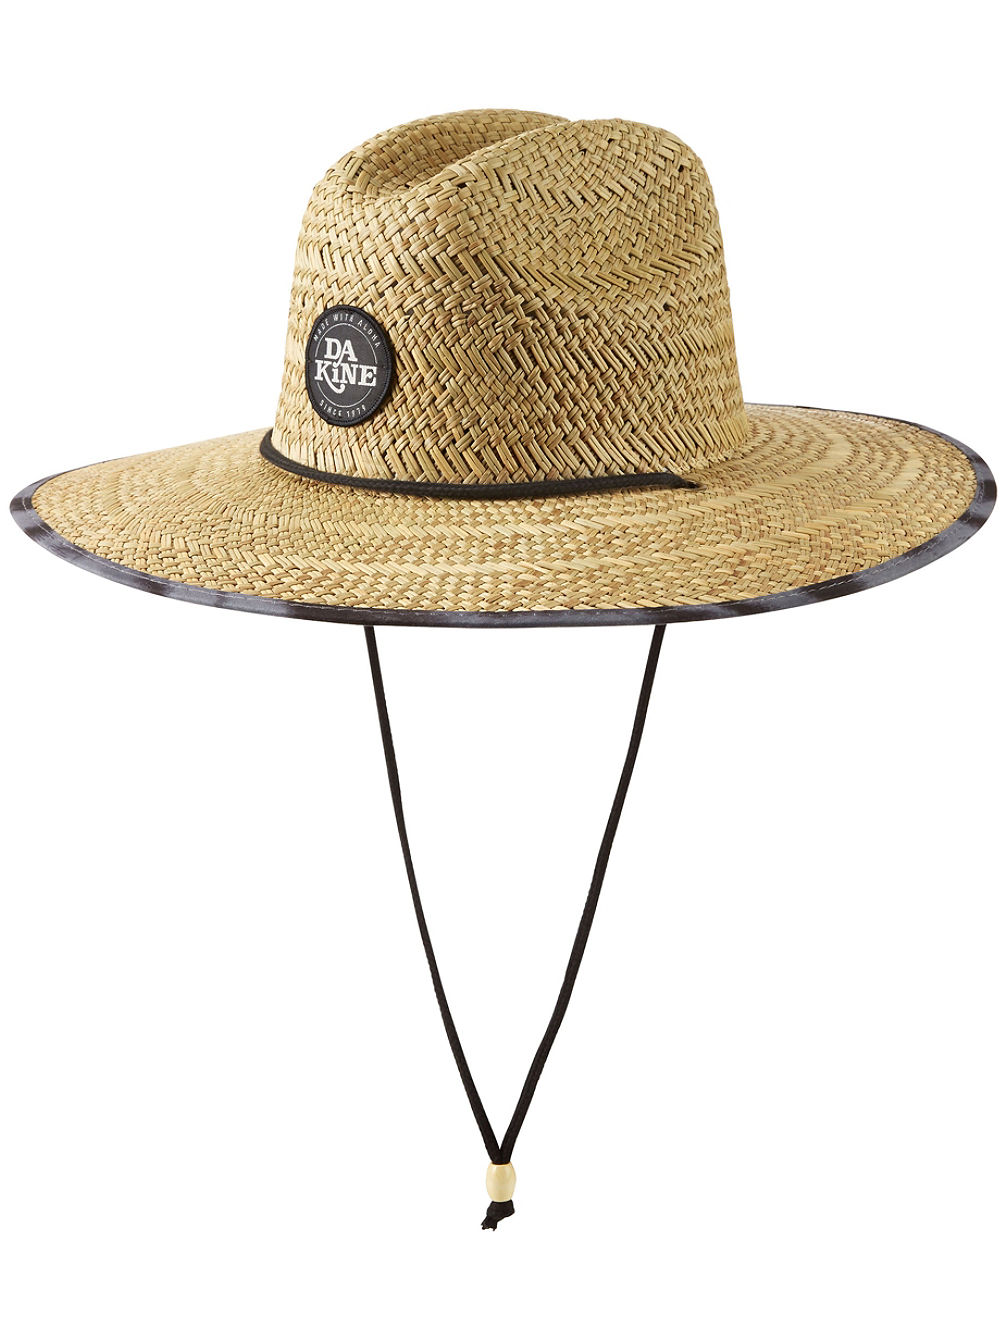 Pindo Straw Hat